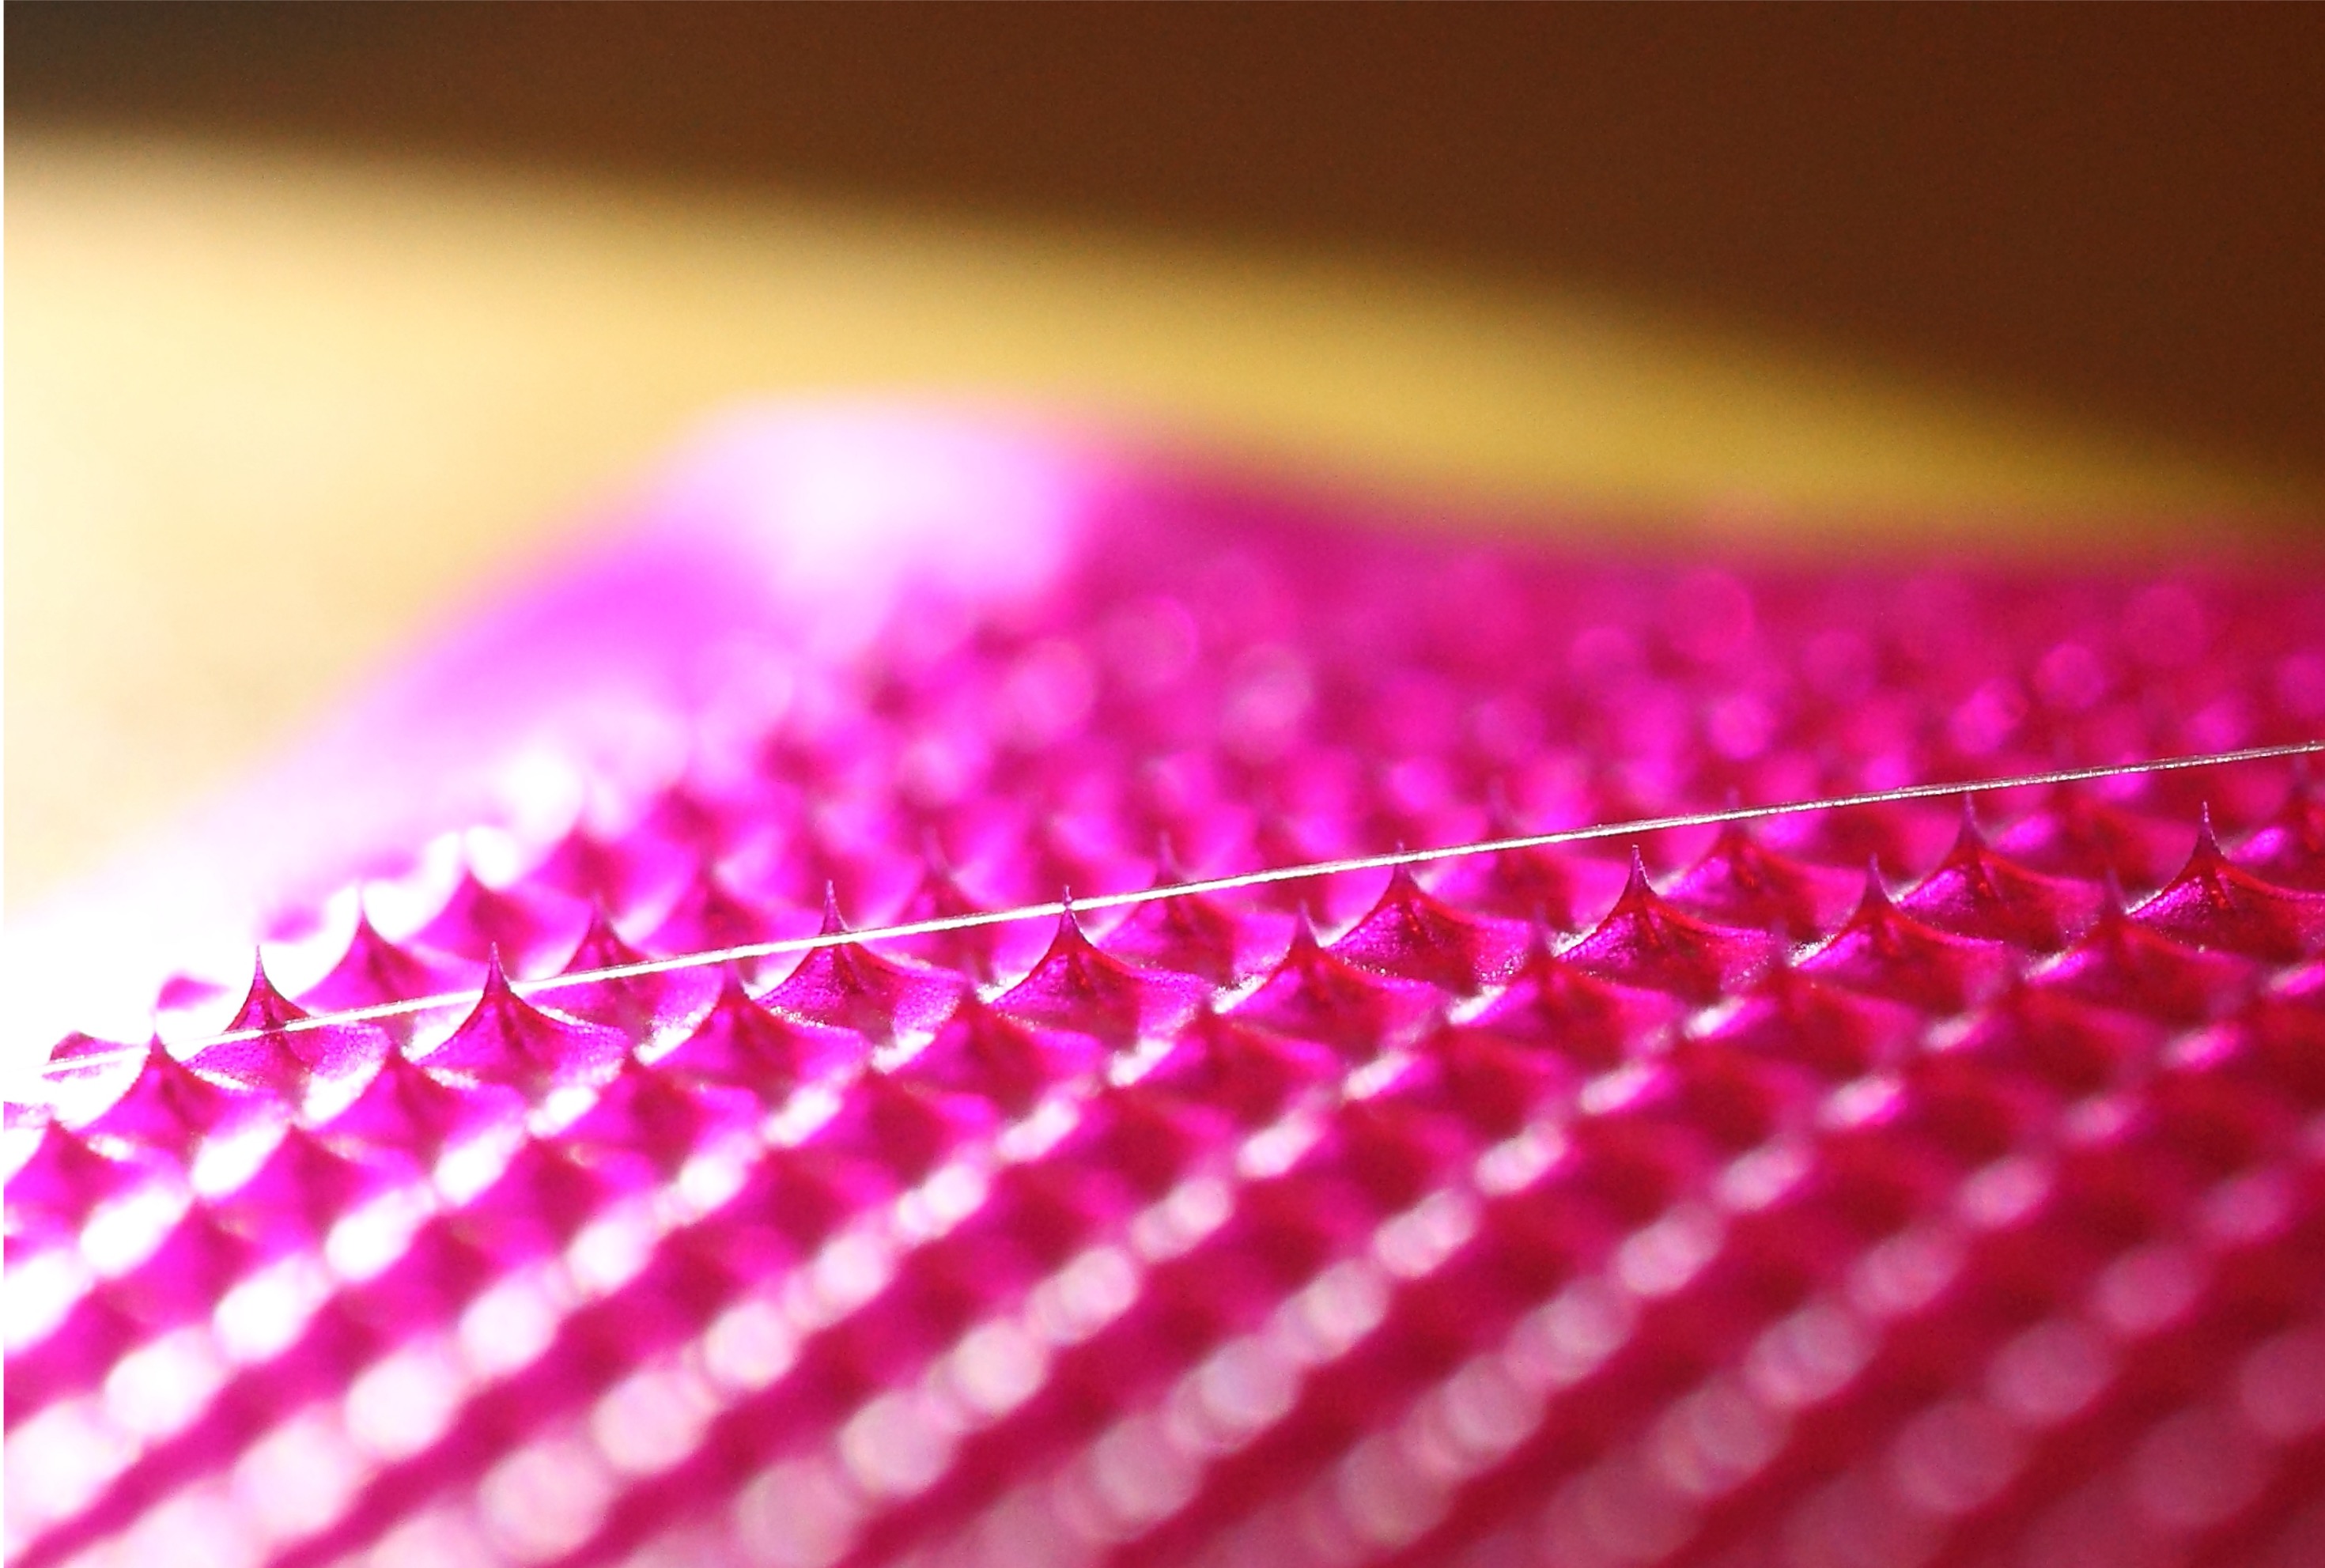 Image of silk-based micro-needles